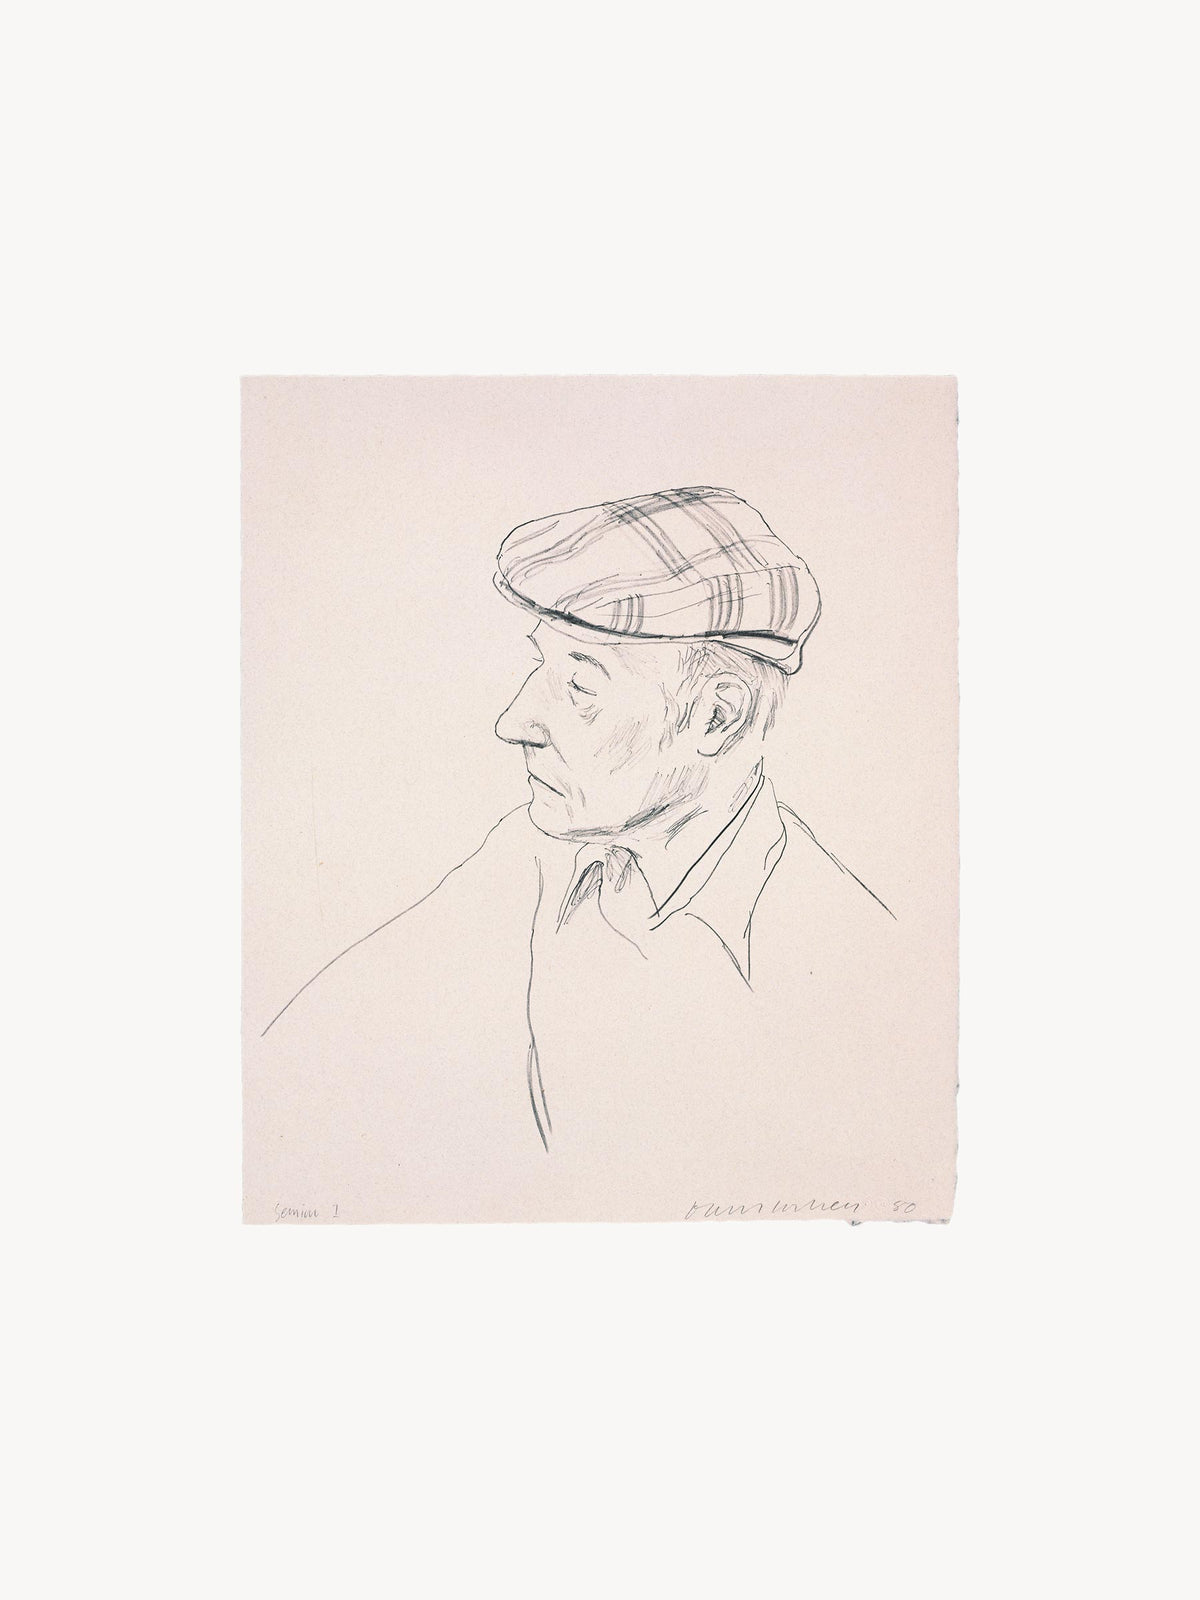 David Hockney, William Burroughs, Edition of 100 - 0272 - Product Flat